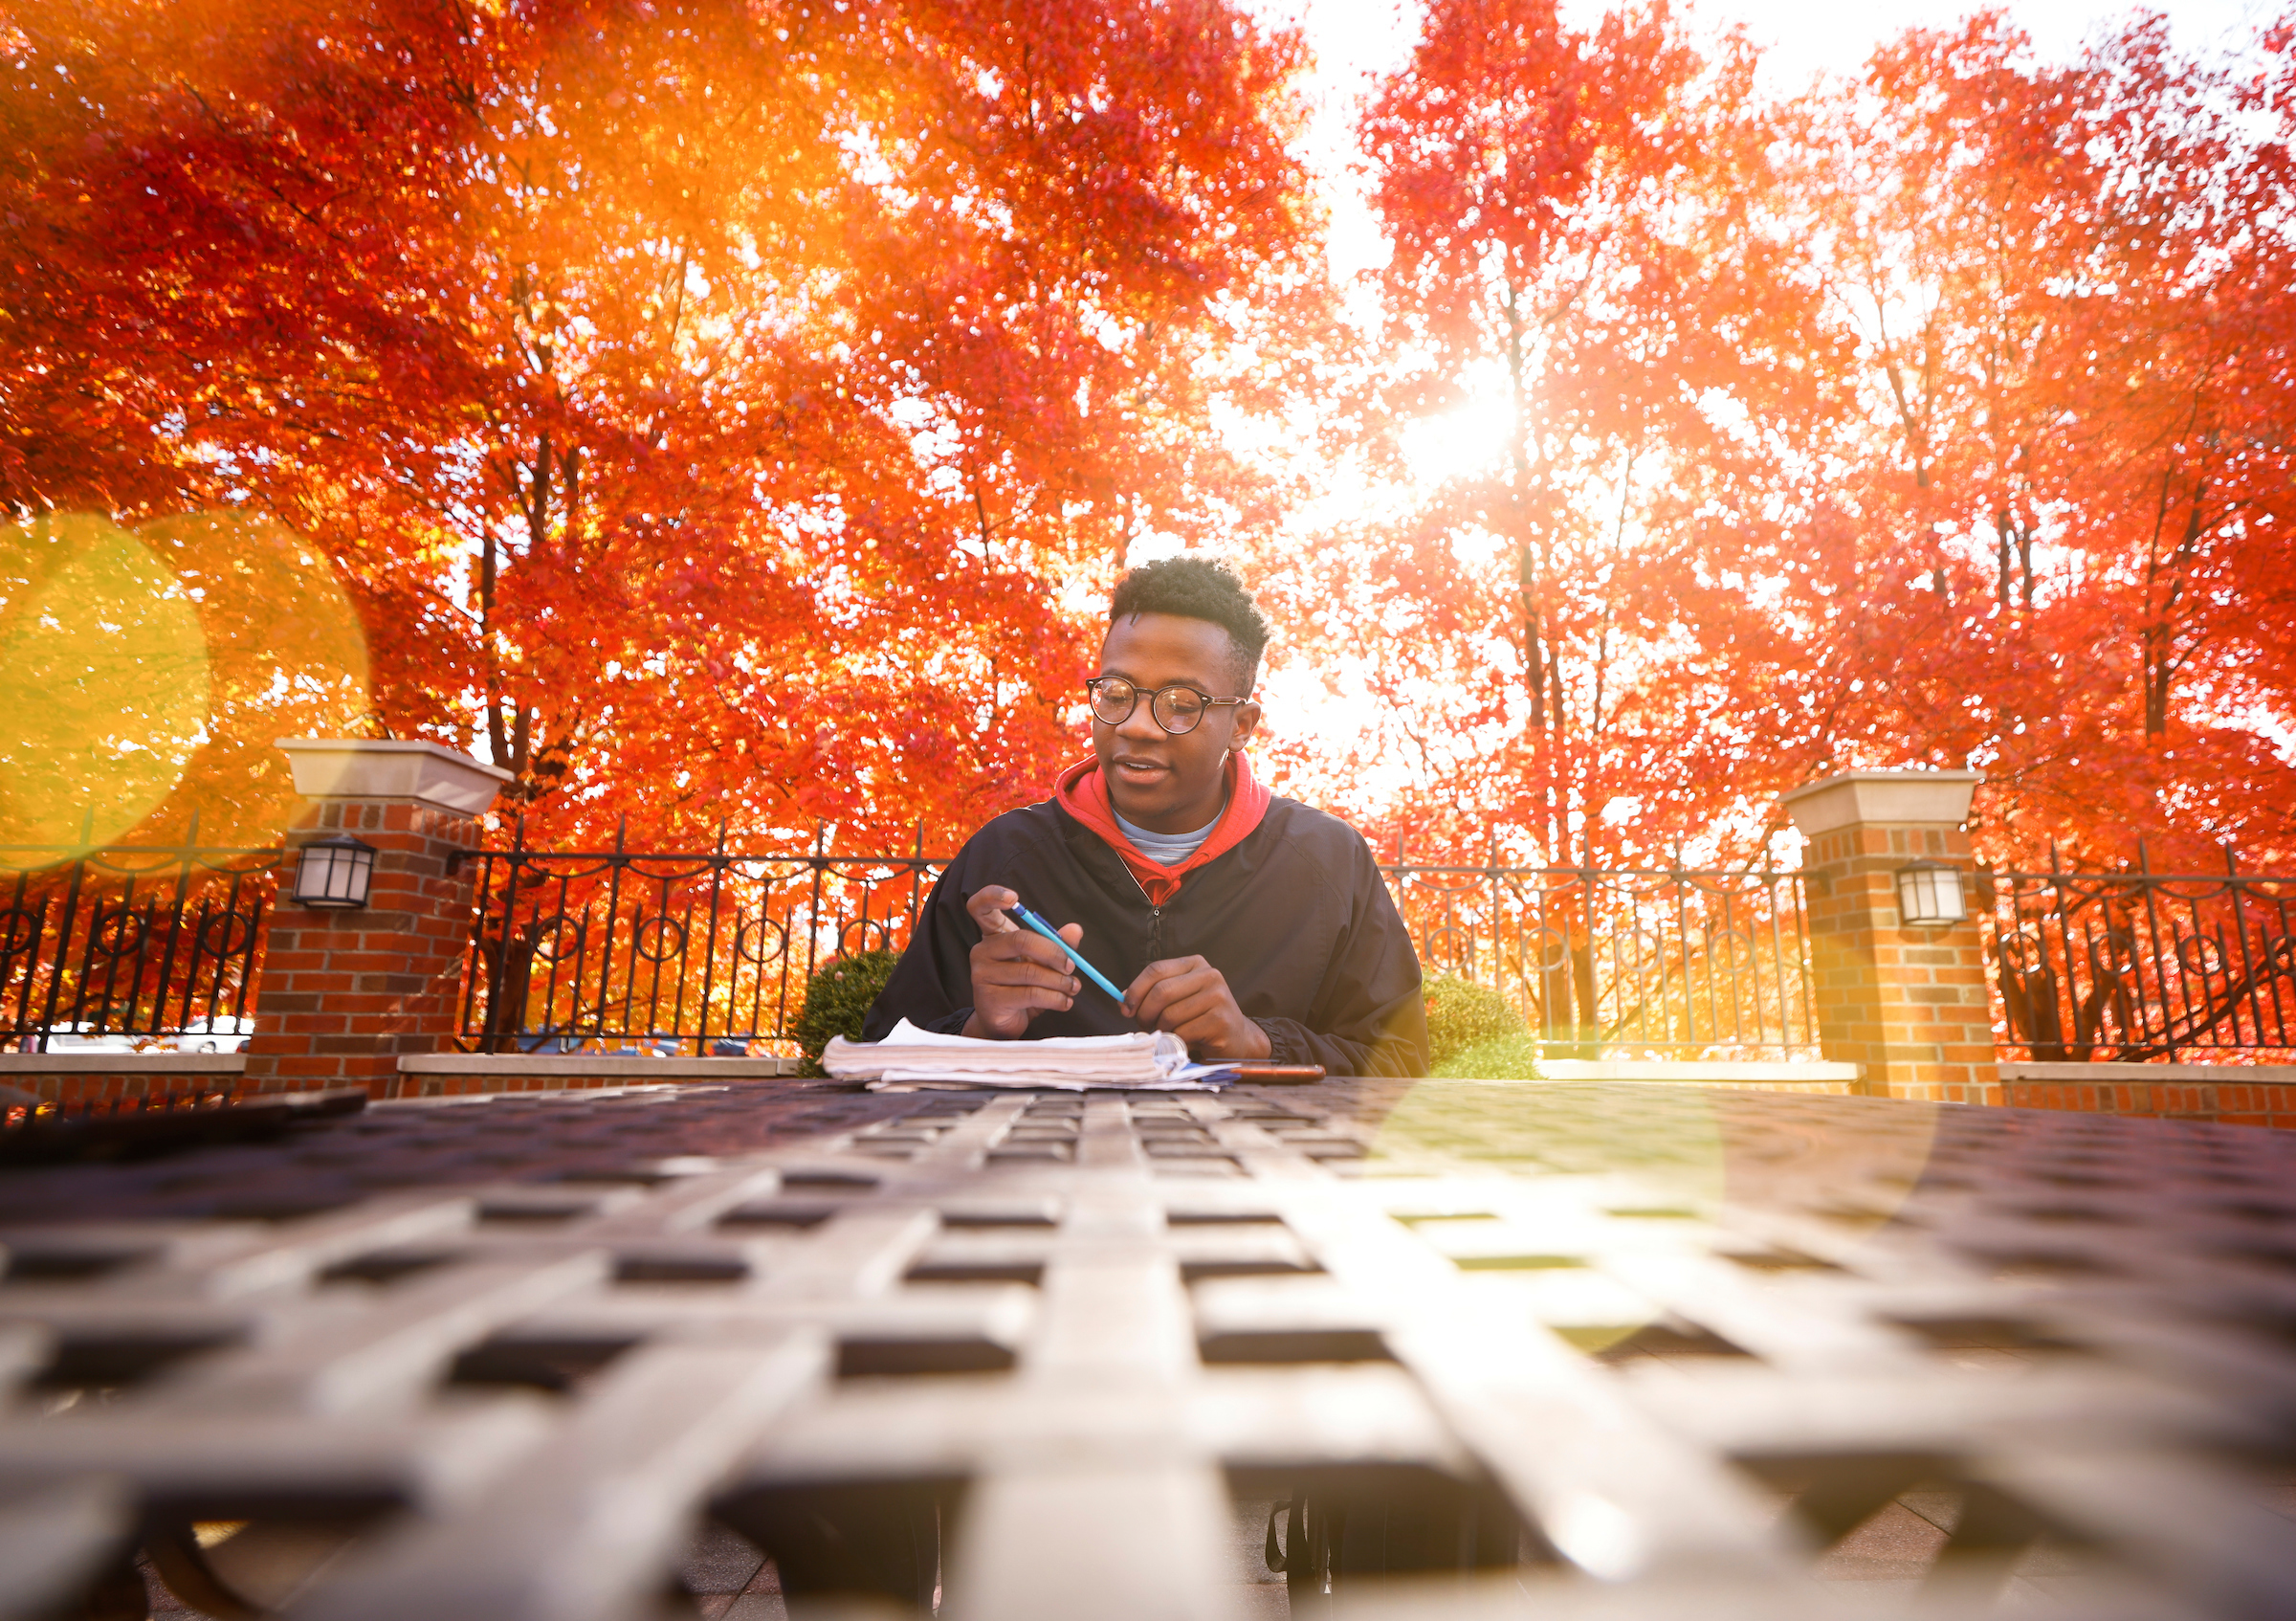 A student enjoying a Fall day